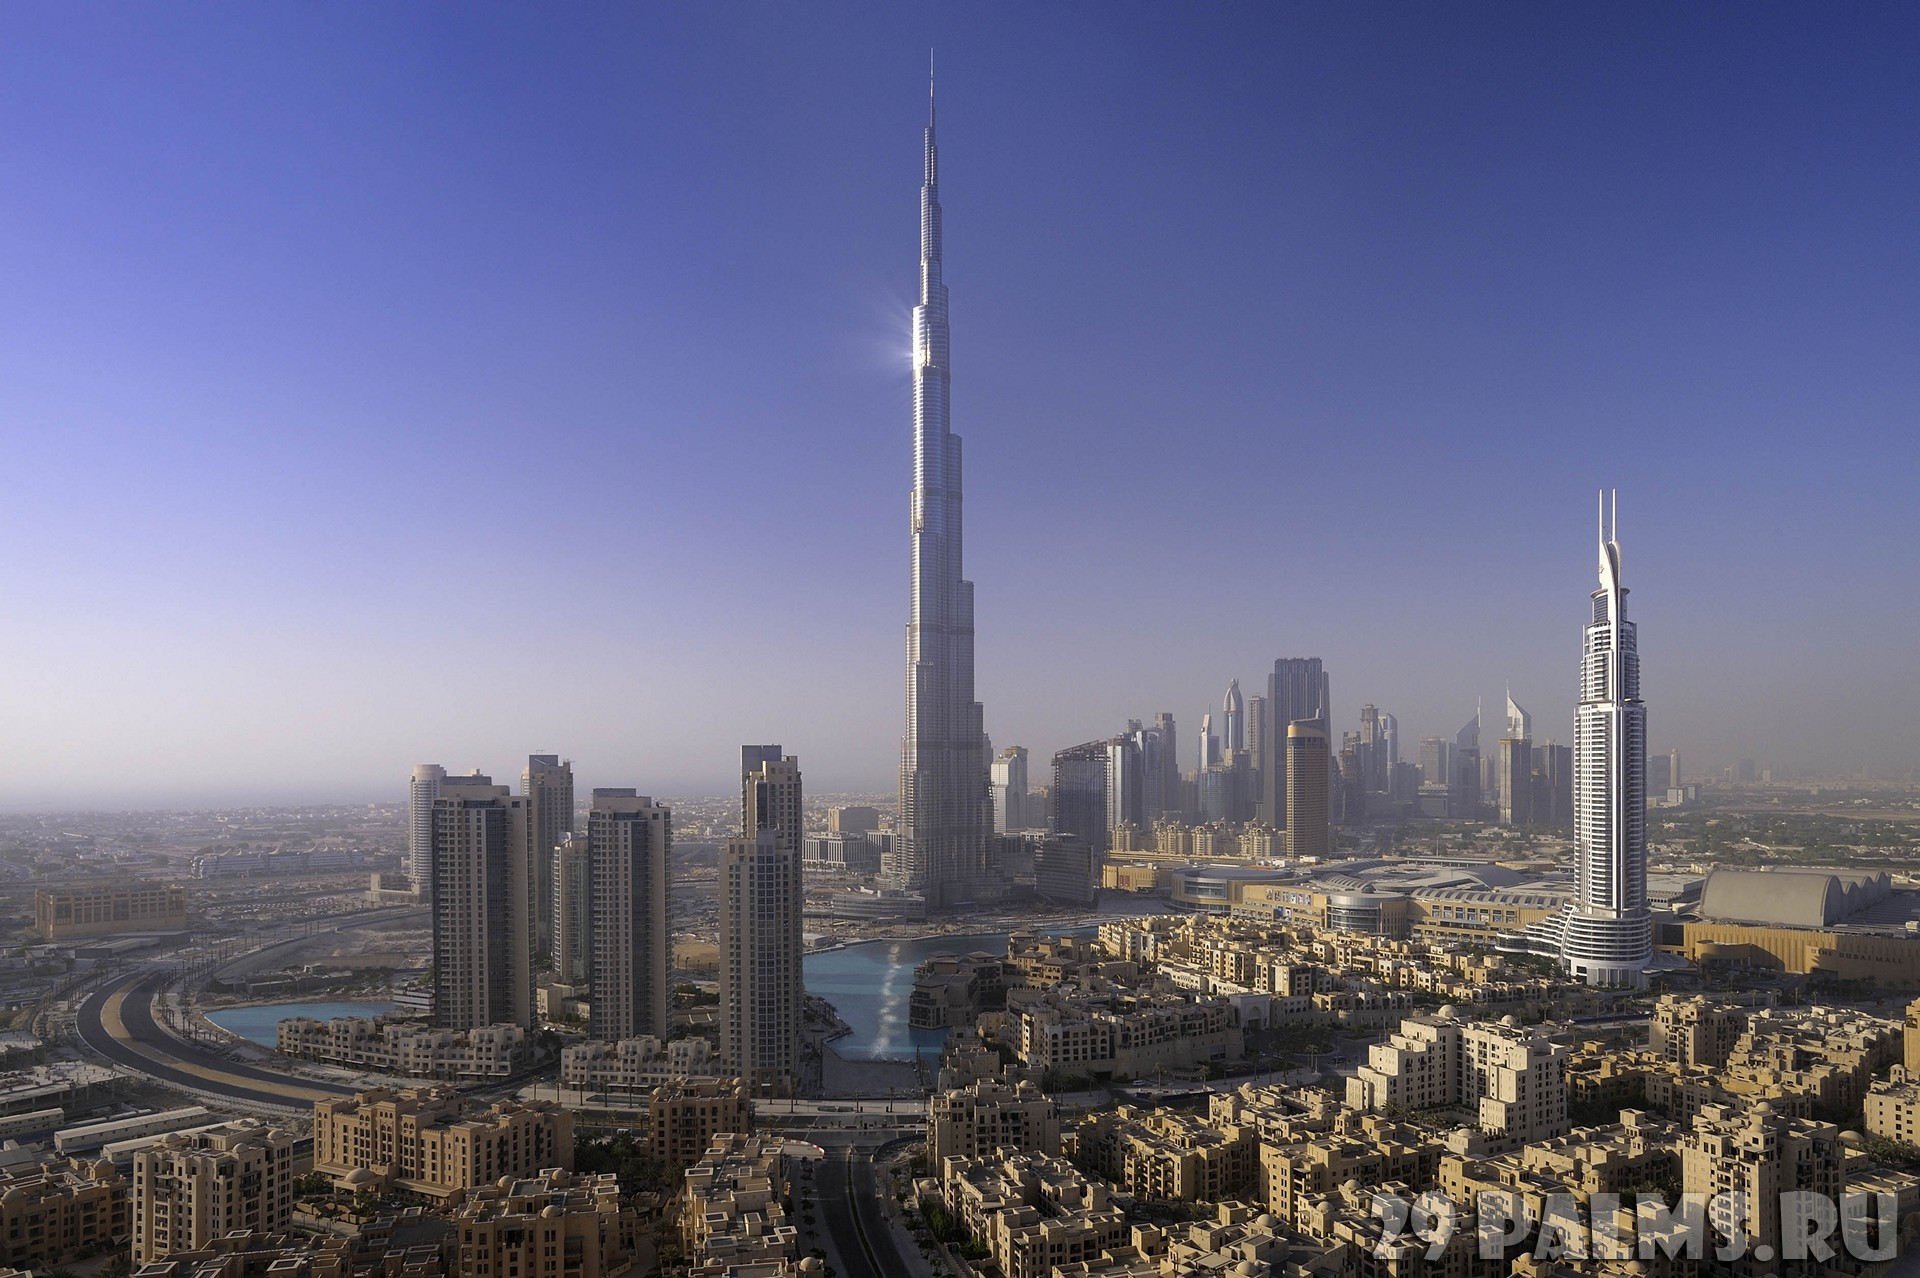 100 в дубае. Башня Бурдж Халифа. Башня Халифа в Дубае. Здание Бурдж Халифа. Небоскрёб Бурдж-Хали́фа (Дубай).